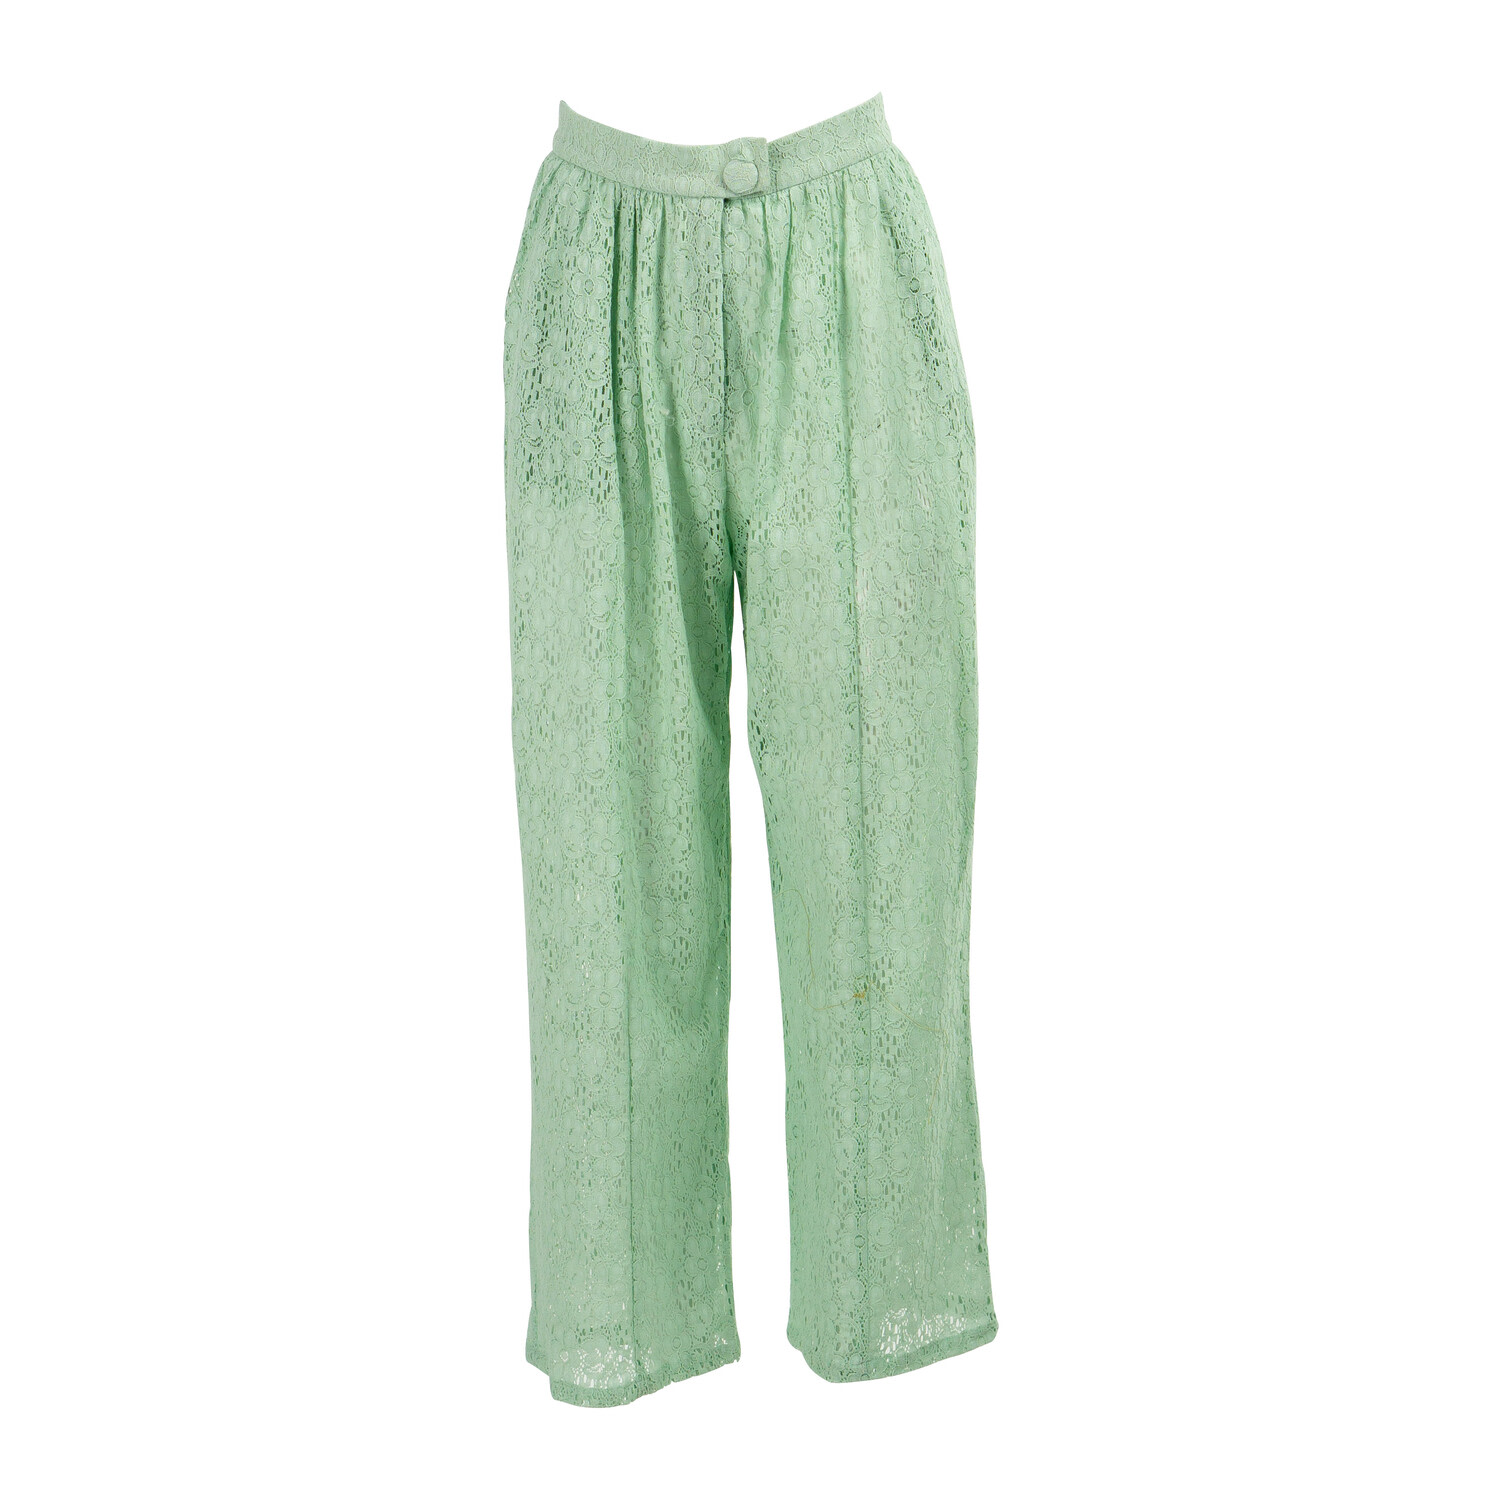 Kristinit Women's Green Lace Keaton Pants